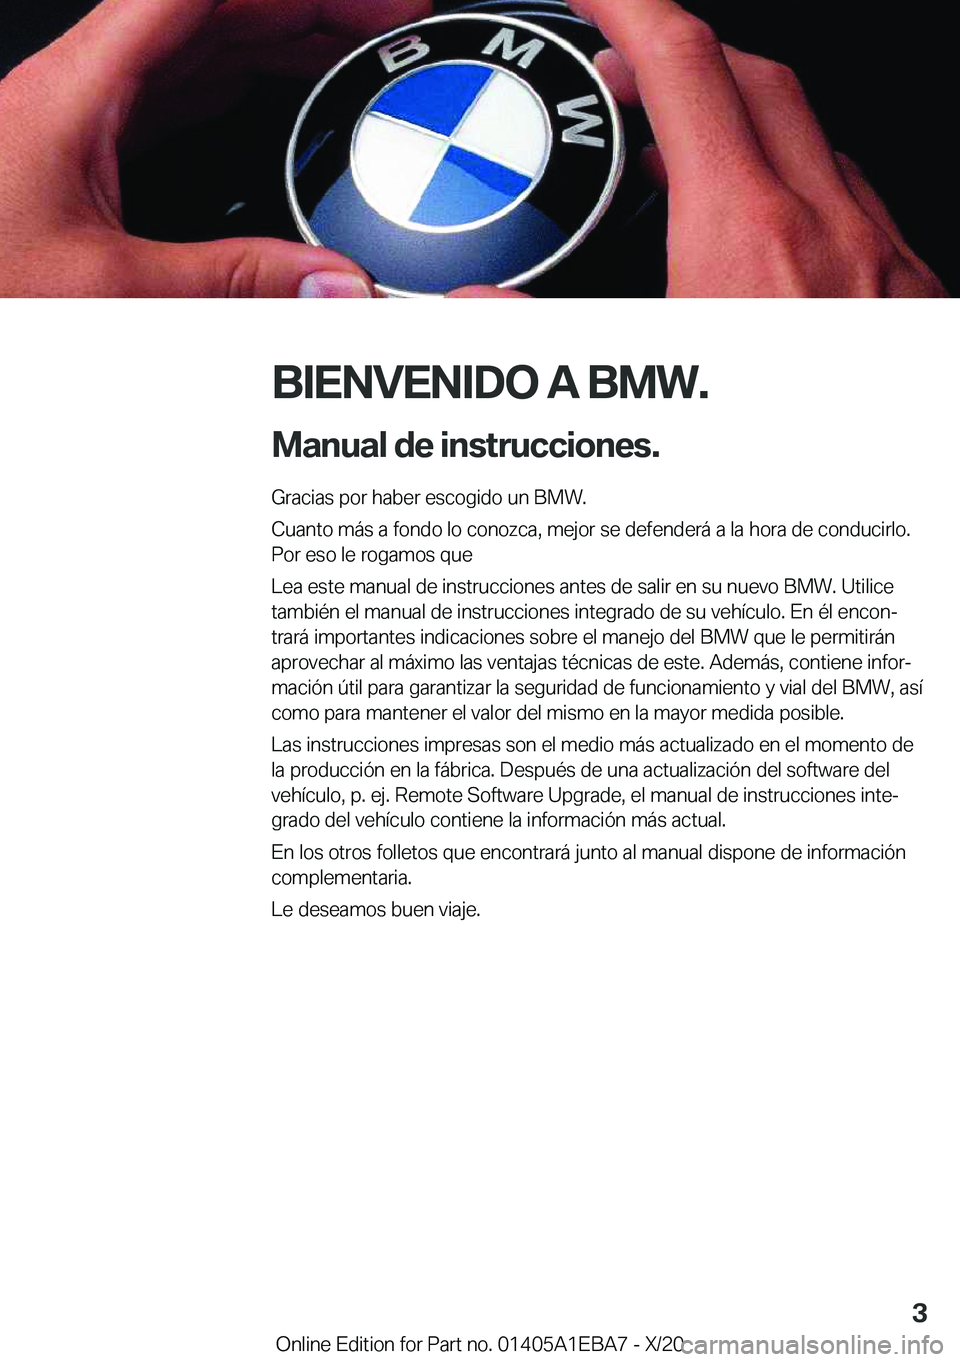 BMW 3 SERIES 2021  Manuales de Empleo (in Spanish) �B�I�E�N�V�E�N�I�D�O��A��B�M�W�.
�M�a�n�u�a�l��d�e��i�n�s�t�r�u�c�c�i�o�n�e�s�. �G�r�a�c�i�a�s��p�o�r��h�a�b�e�r��e�s�c�o�g�i�d�o��u�n��B�M�W�.
�C�u�a�n�t�o��m�